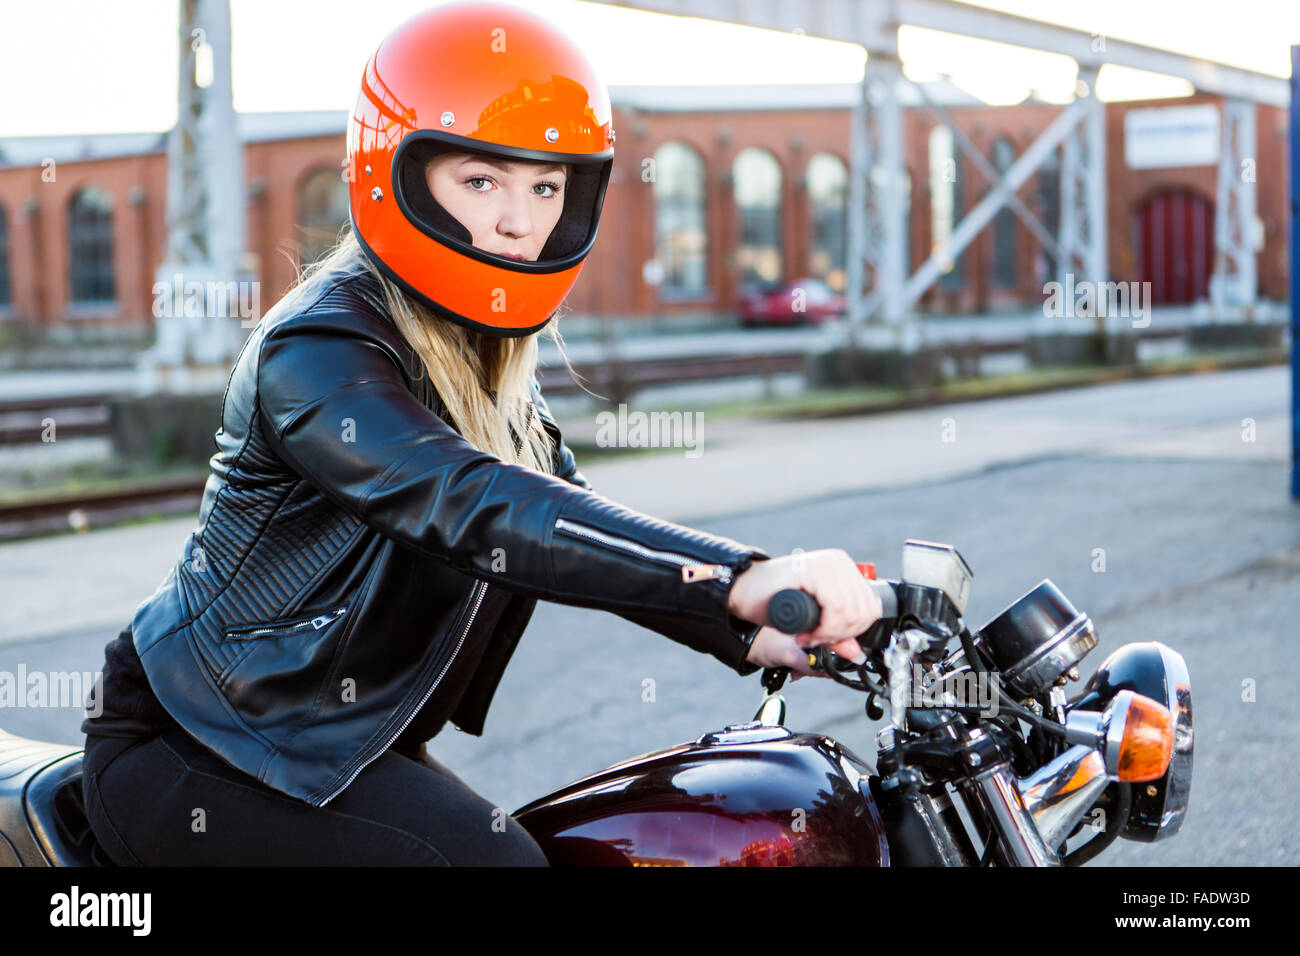 Cute girl with blond hair with orange motorcycle helmet. Outdoor, urban scene. Stock Photo